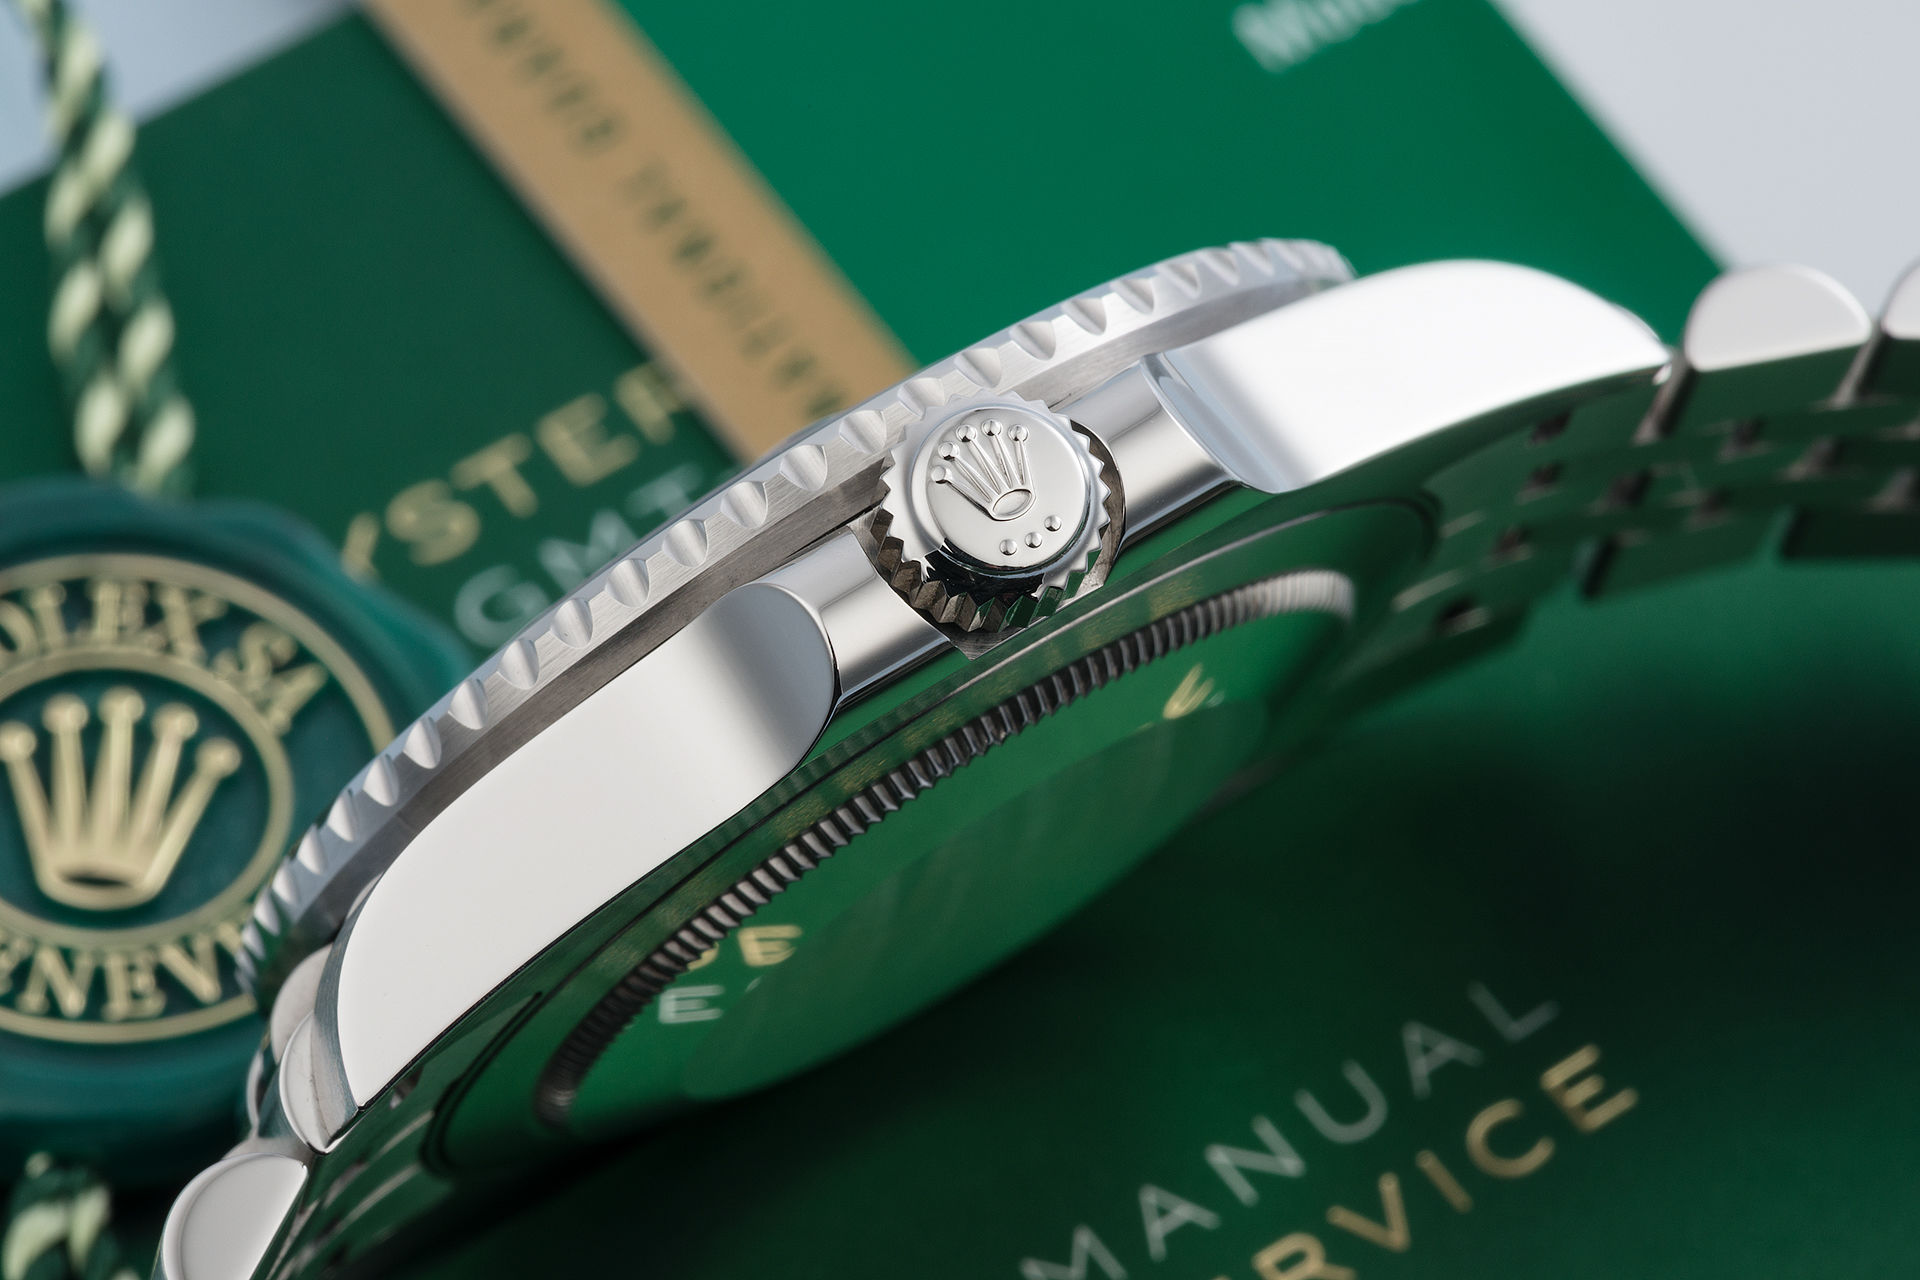 ref 126710BLRO | Full Set 'Five Year Warranty' | Rolex GMT-Master II